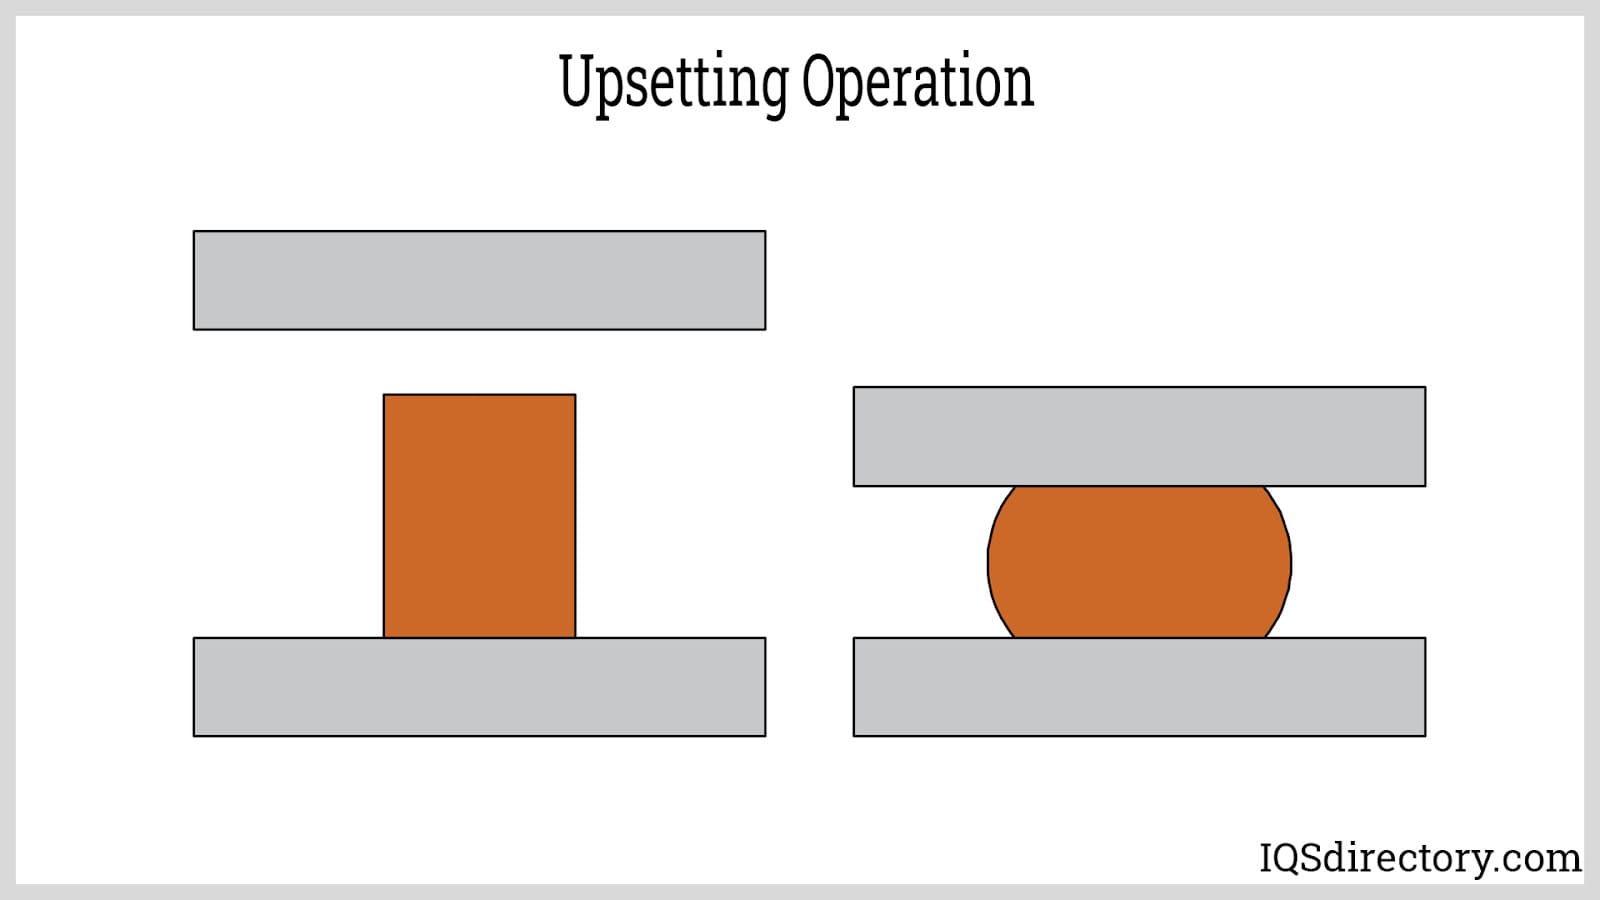 Upsetting Operation